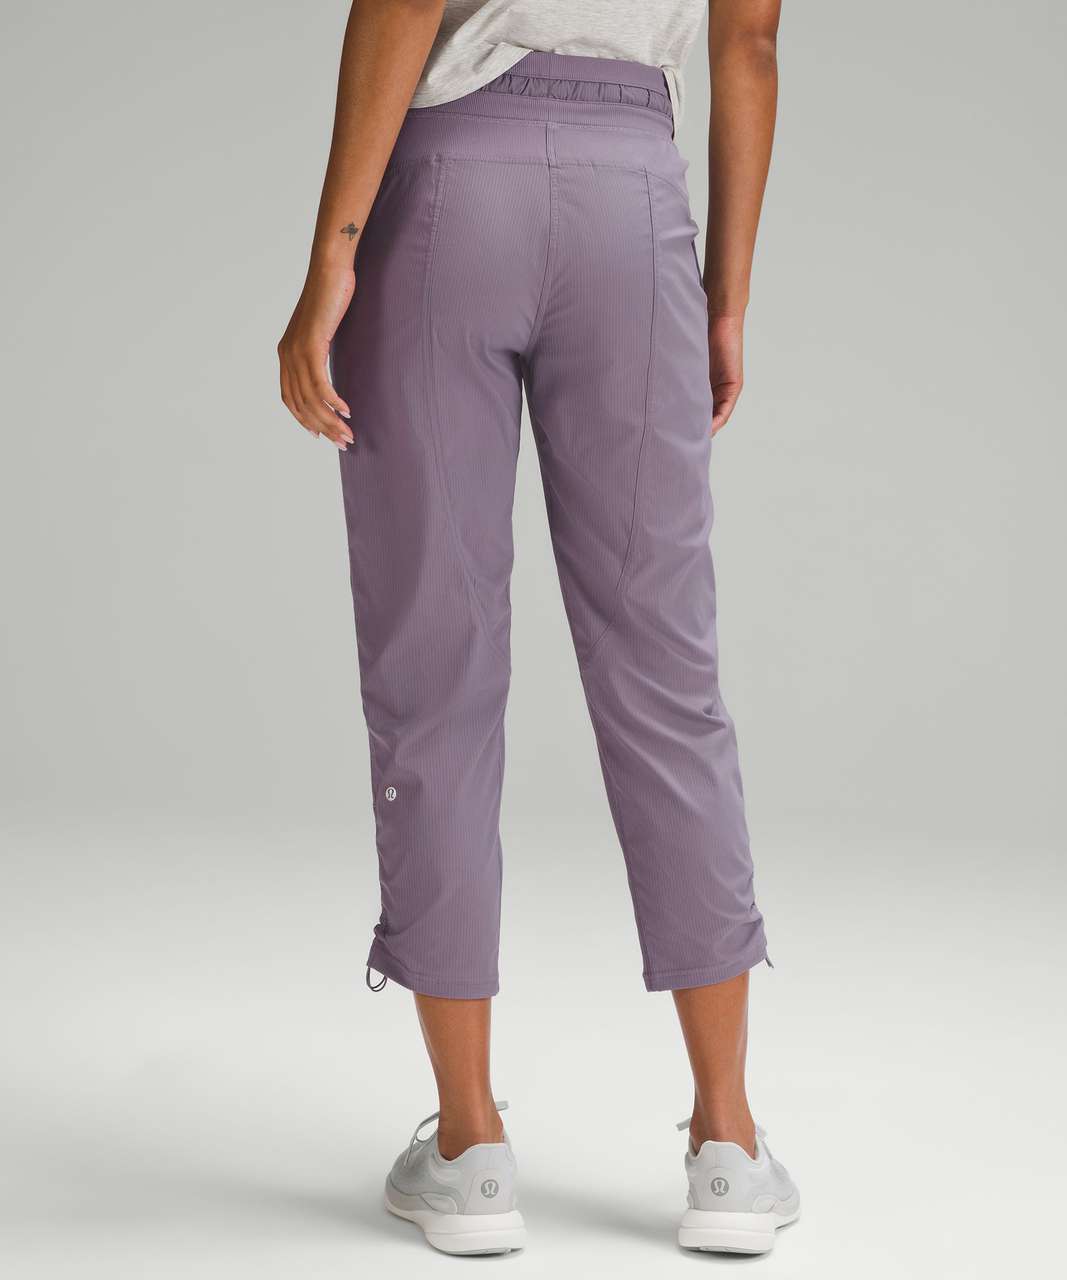 Lululemon Purple Plum Dance Studio Pants Women's Size 6 Yoga